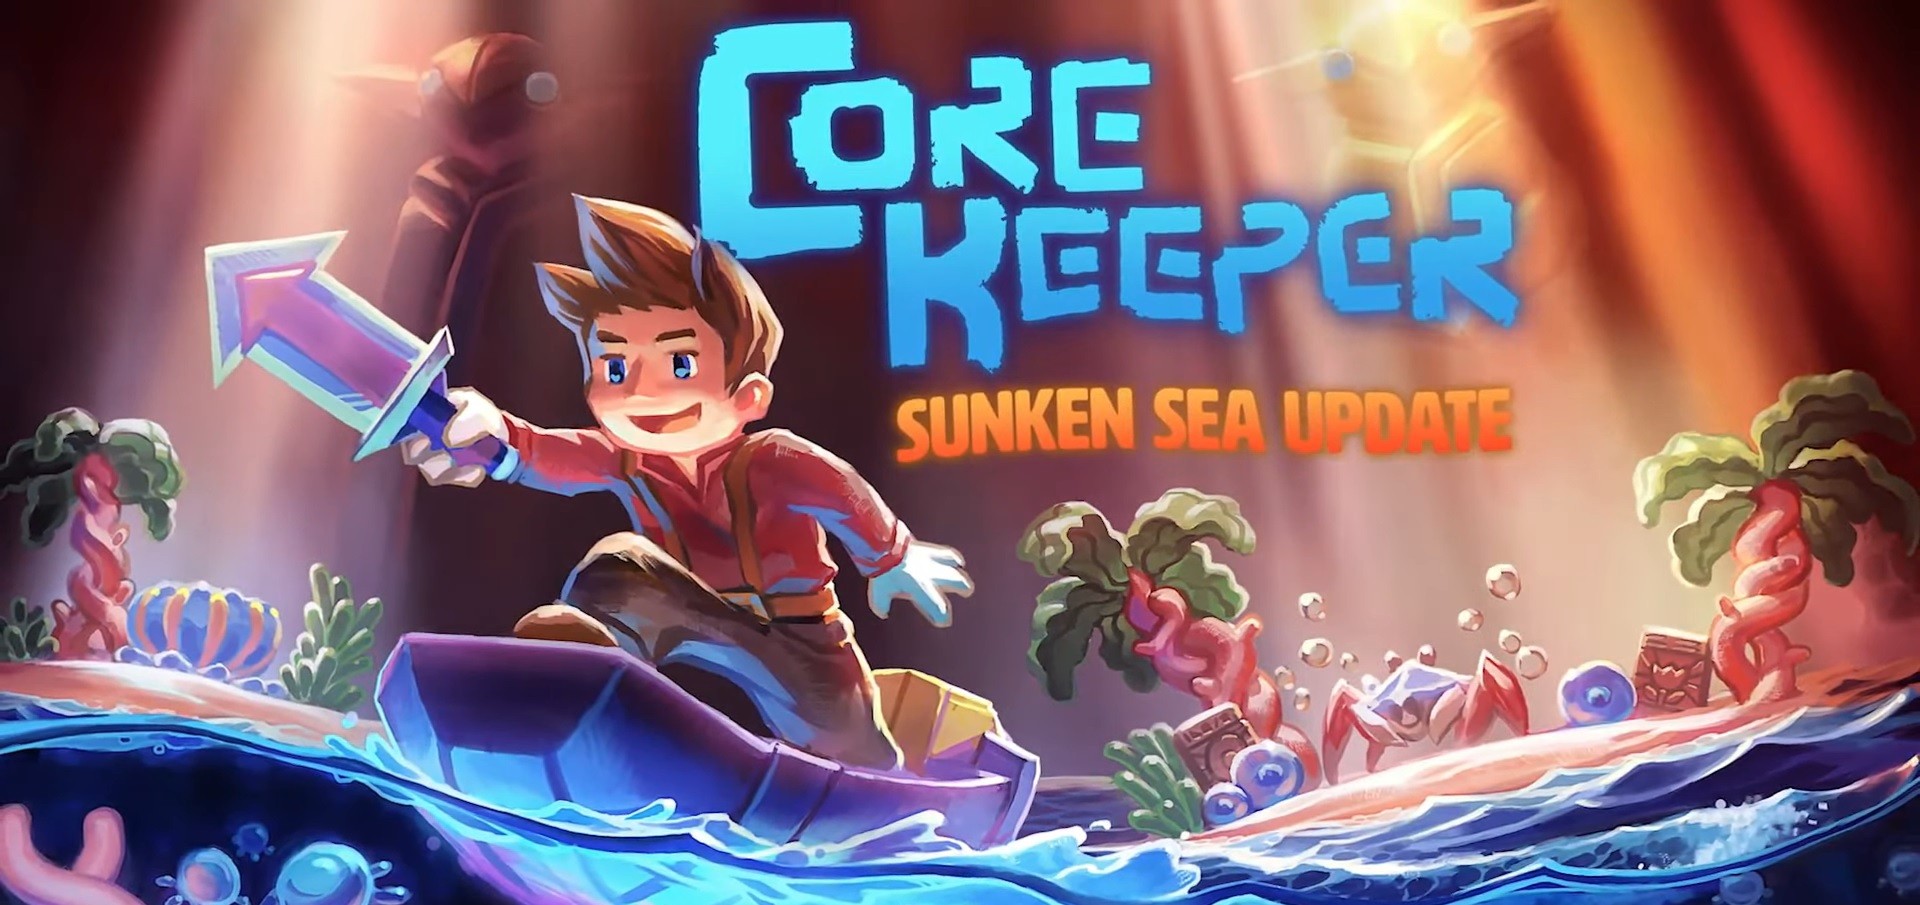 Core Keeper เกมสำรวจถ้ำดูดเวลา เปิดตัวอัปเดตแรก Sunken Sea